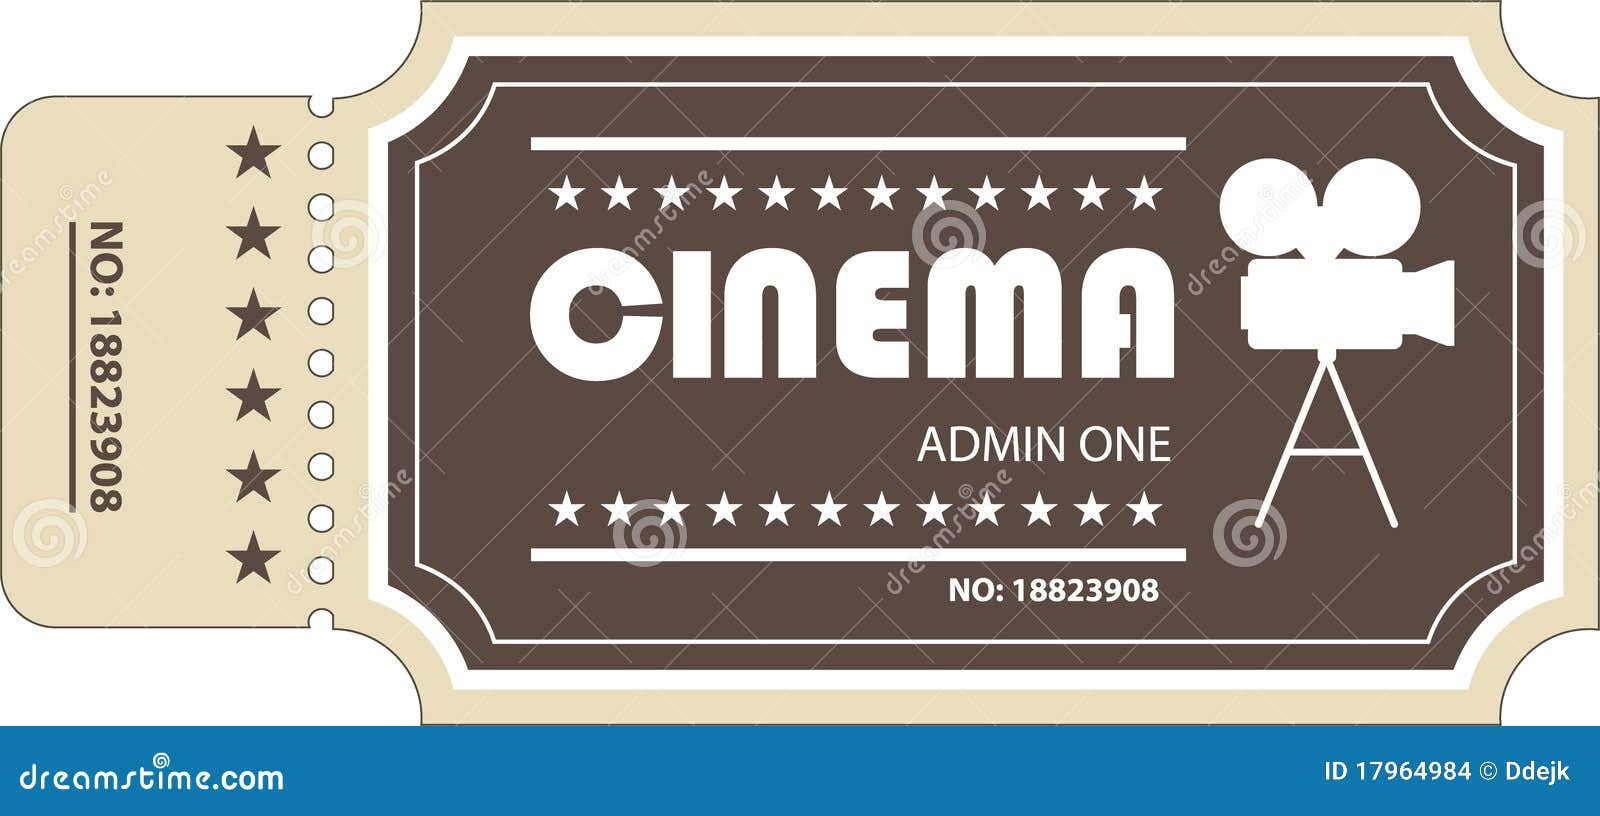 clipart movie ticket image - photo #44